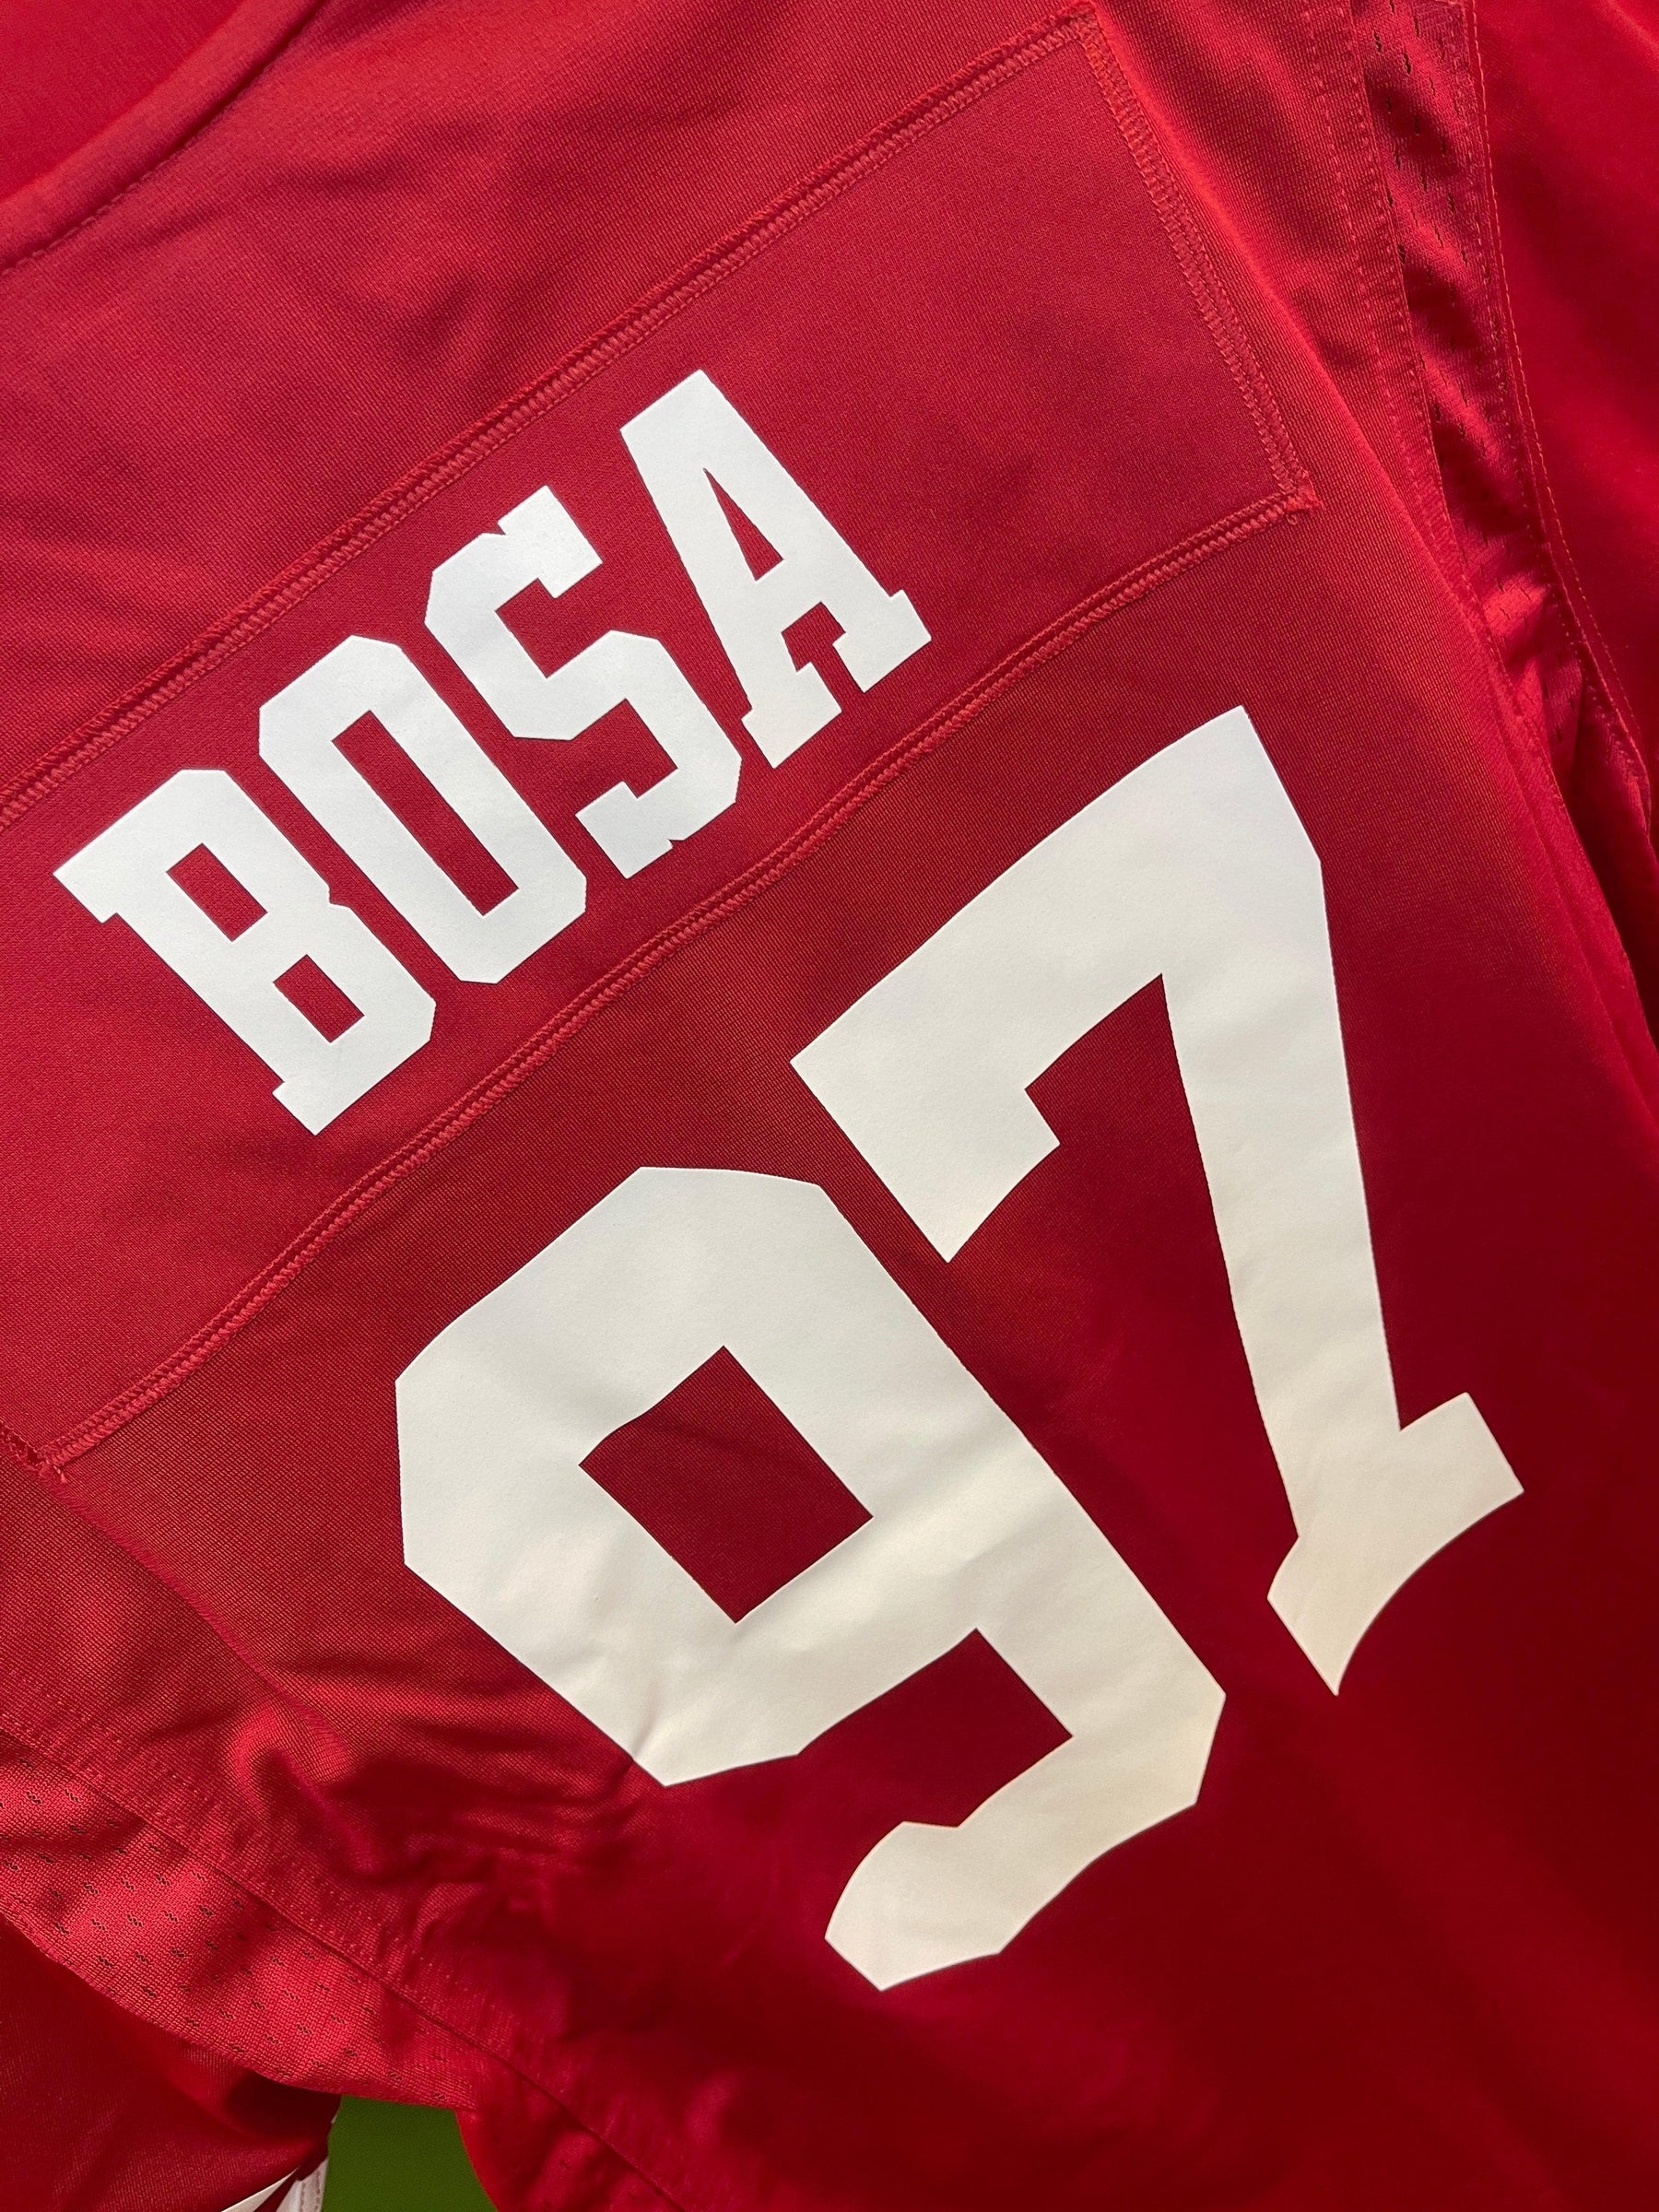 NFL San Francisco 49ers Nick Bosa #97 Game Jersey Men's X-Large NWT